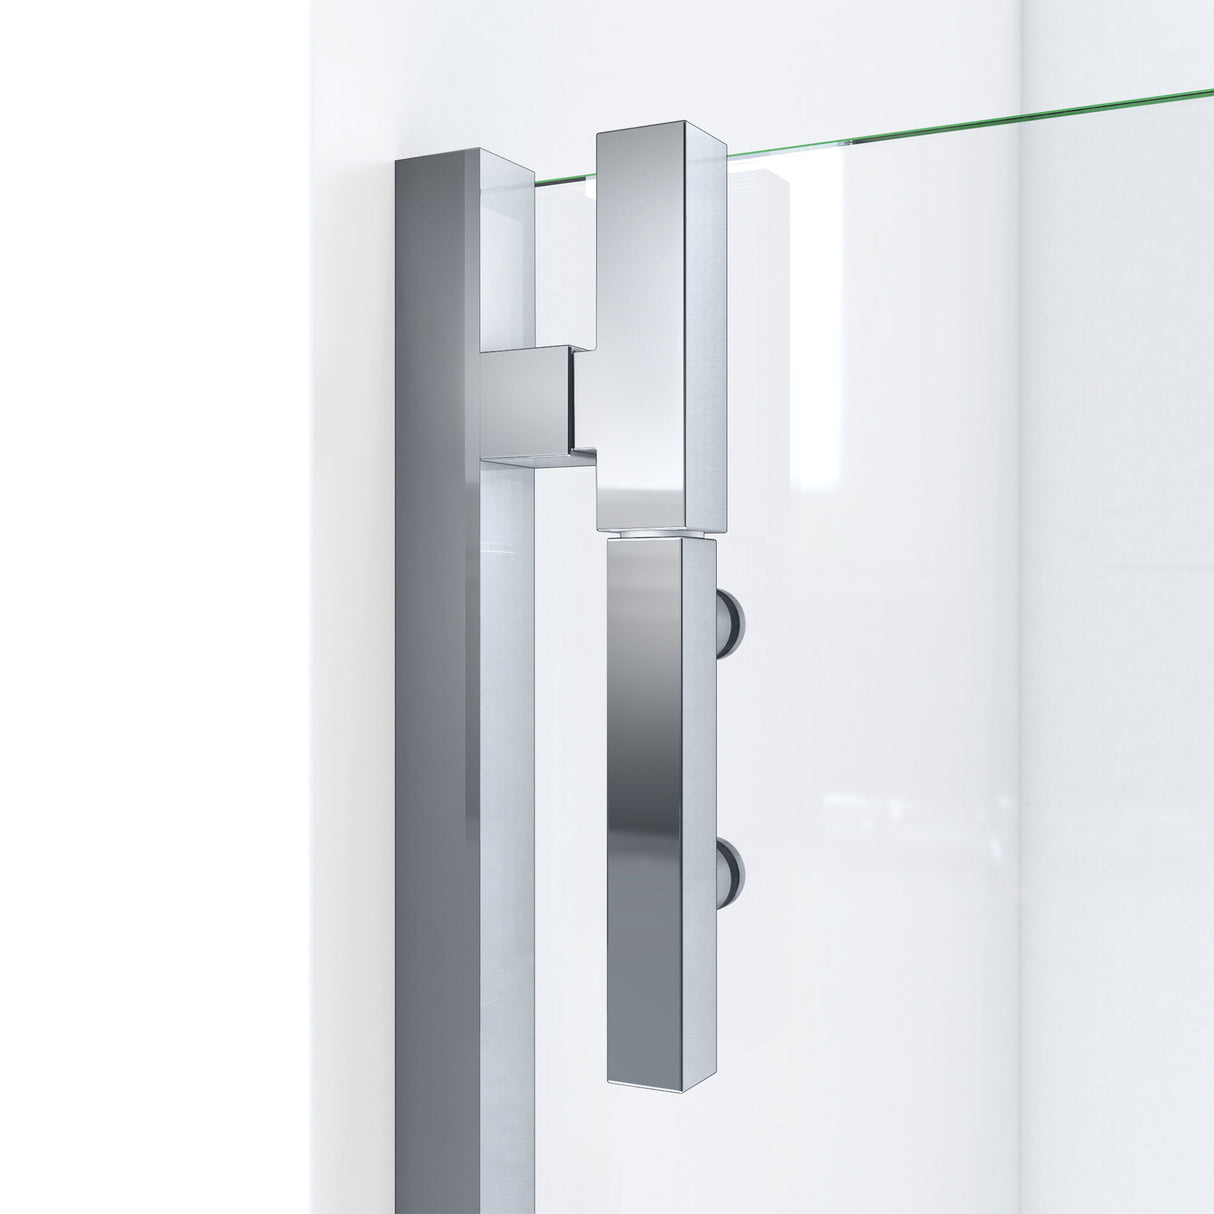 DreamLine Ascend 50-51 in. W x 72 in. H Frameless Pivot Shower Door in Brushed Nickel